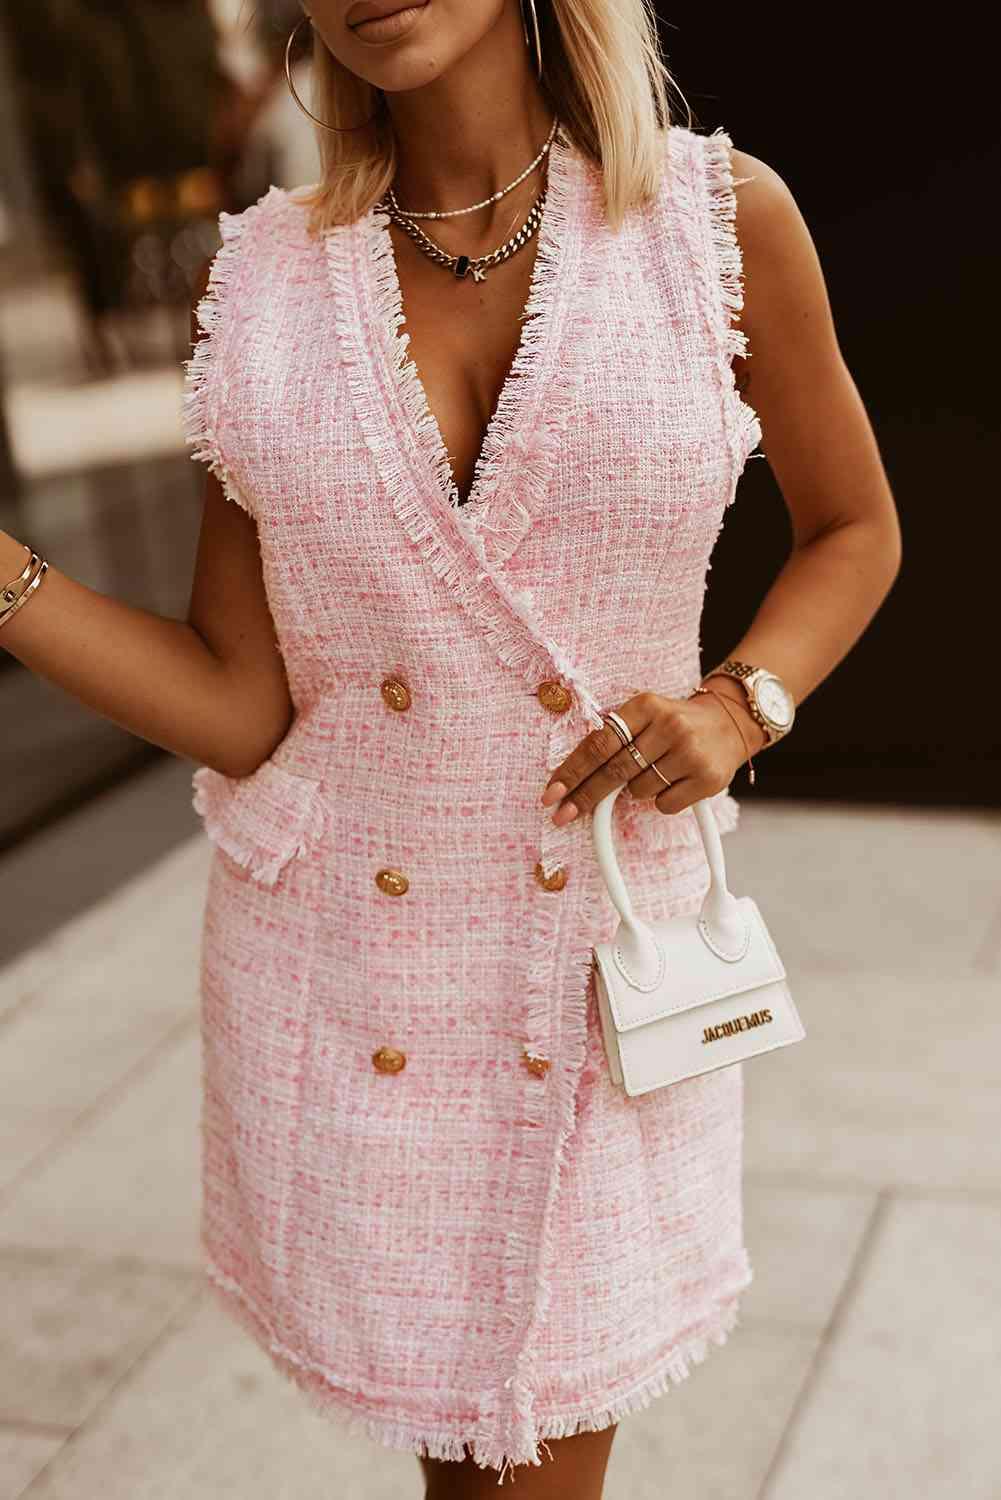 a woman wearing a pink dress and a white purse